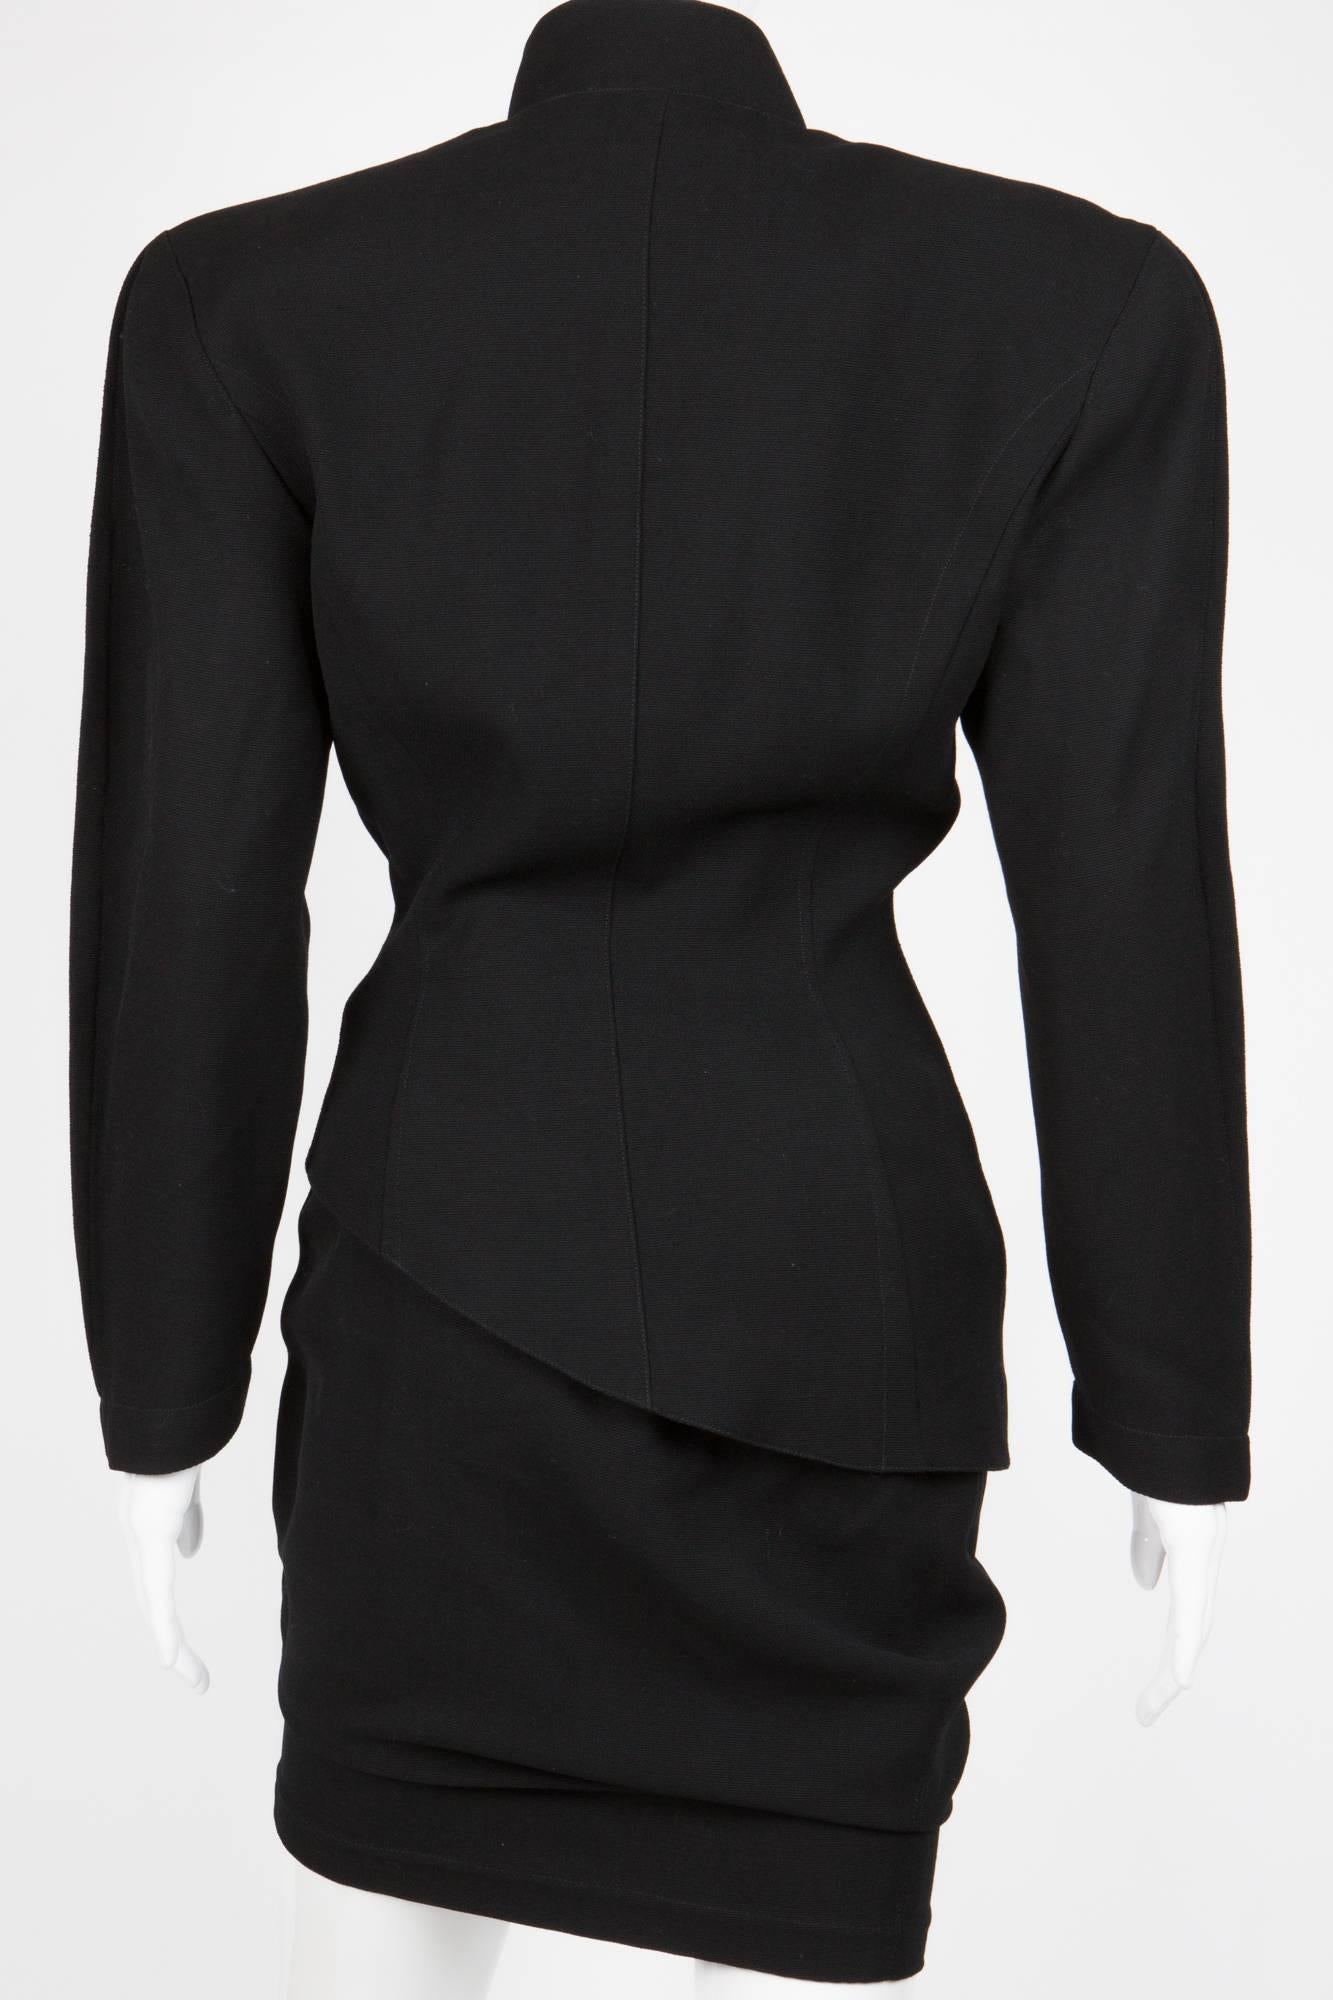 Women's 1980s Iconic Thierry Mugler Black Asymmetric Jacket